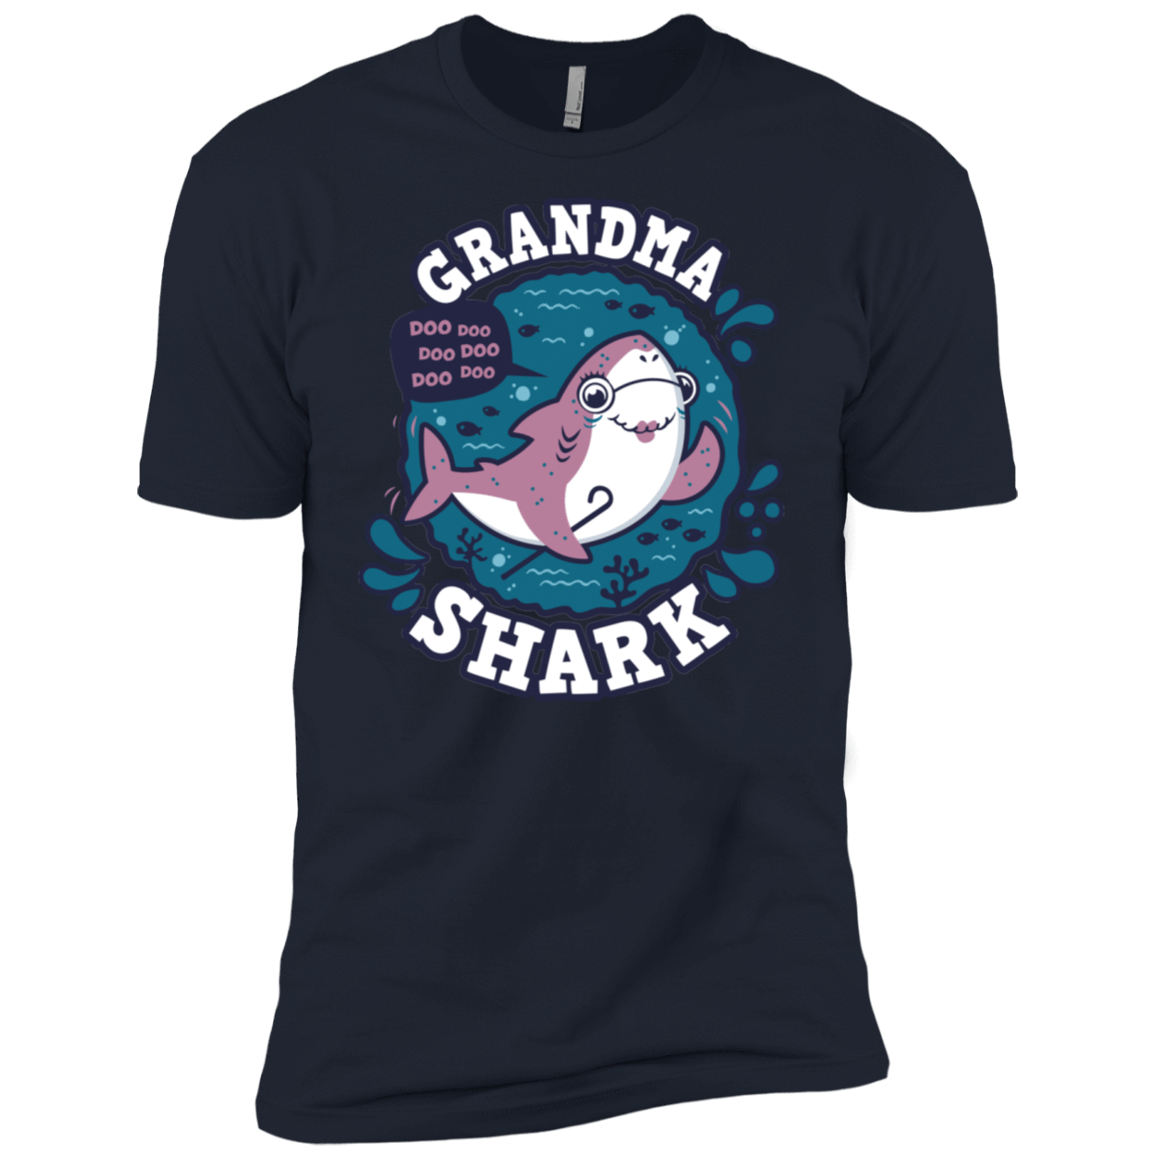 T-Shirts Midnight Navy / X-Small Shark Family trazo - Grandma Men's Premium T-Shirt